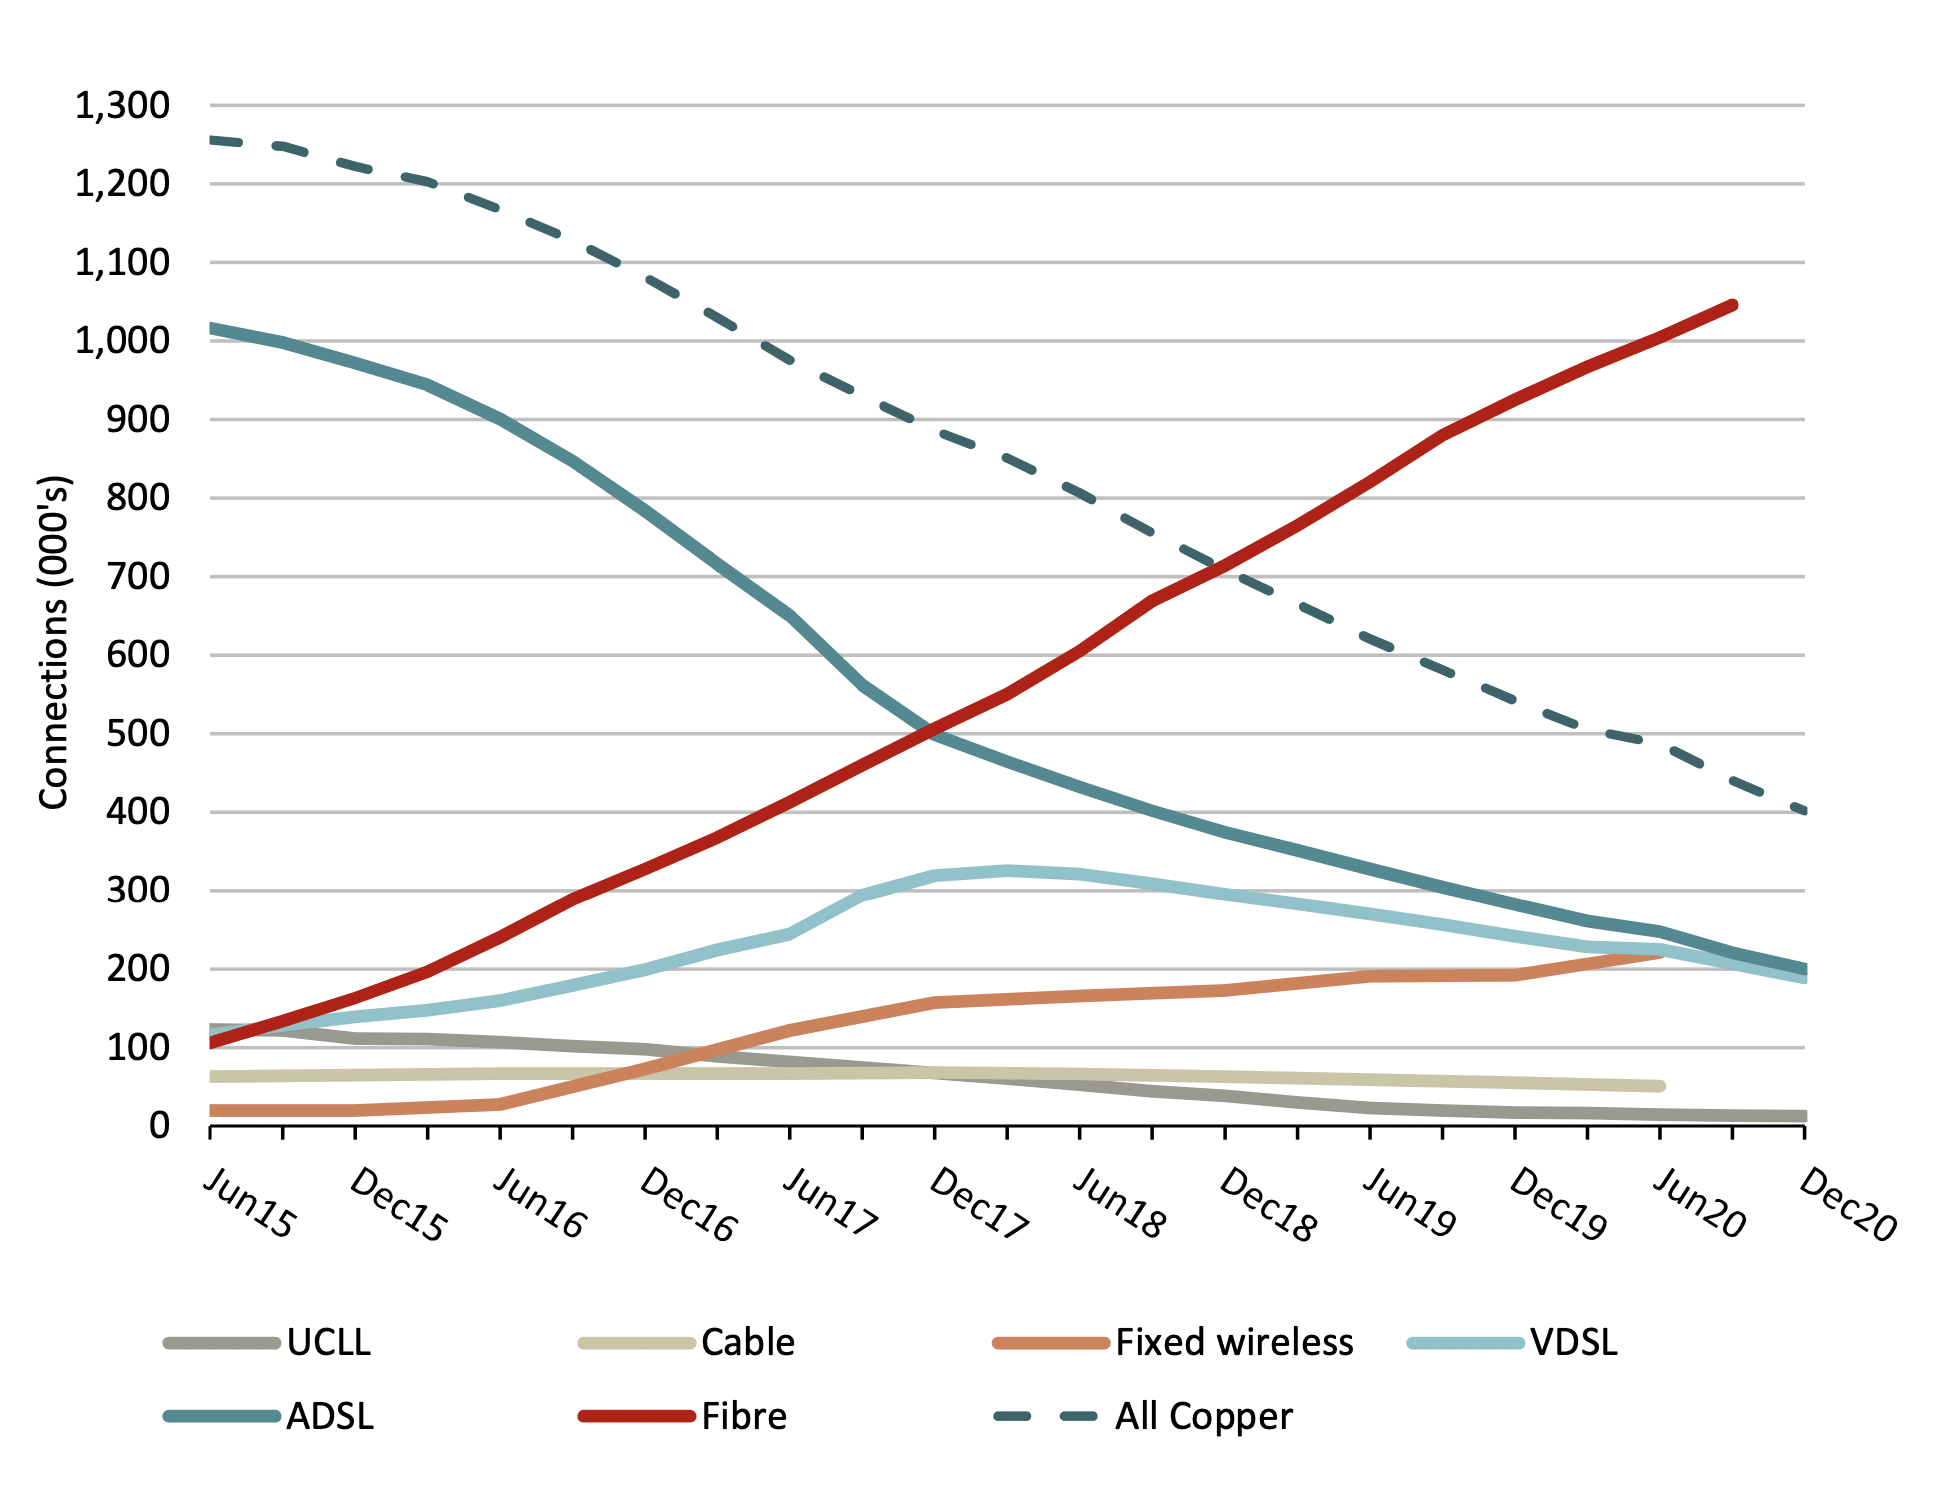 Connection speeds, broadband technologies, New Zealand 2015 to 2020. 